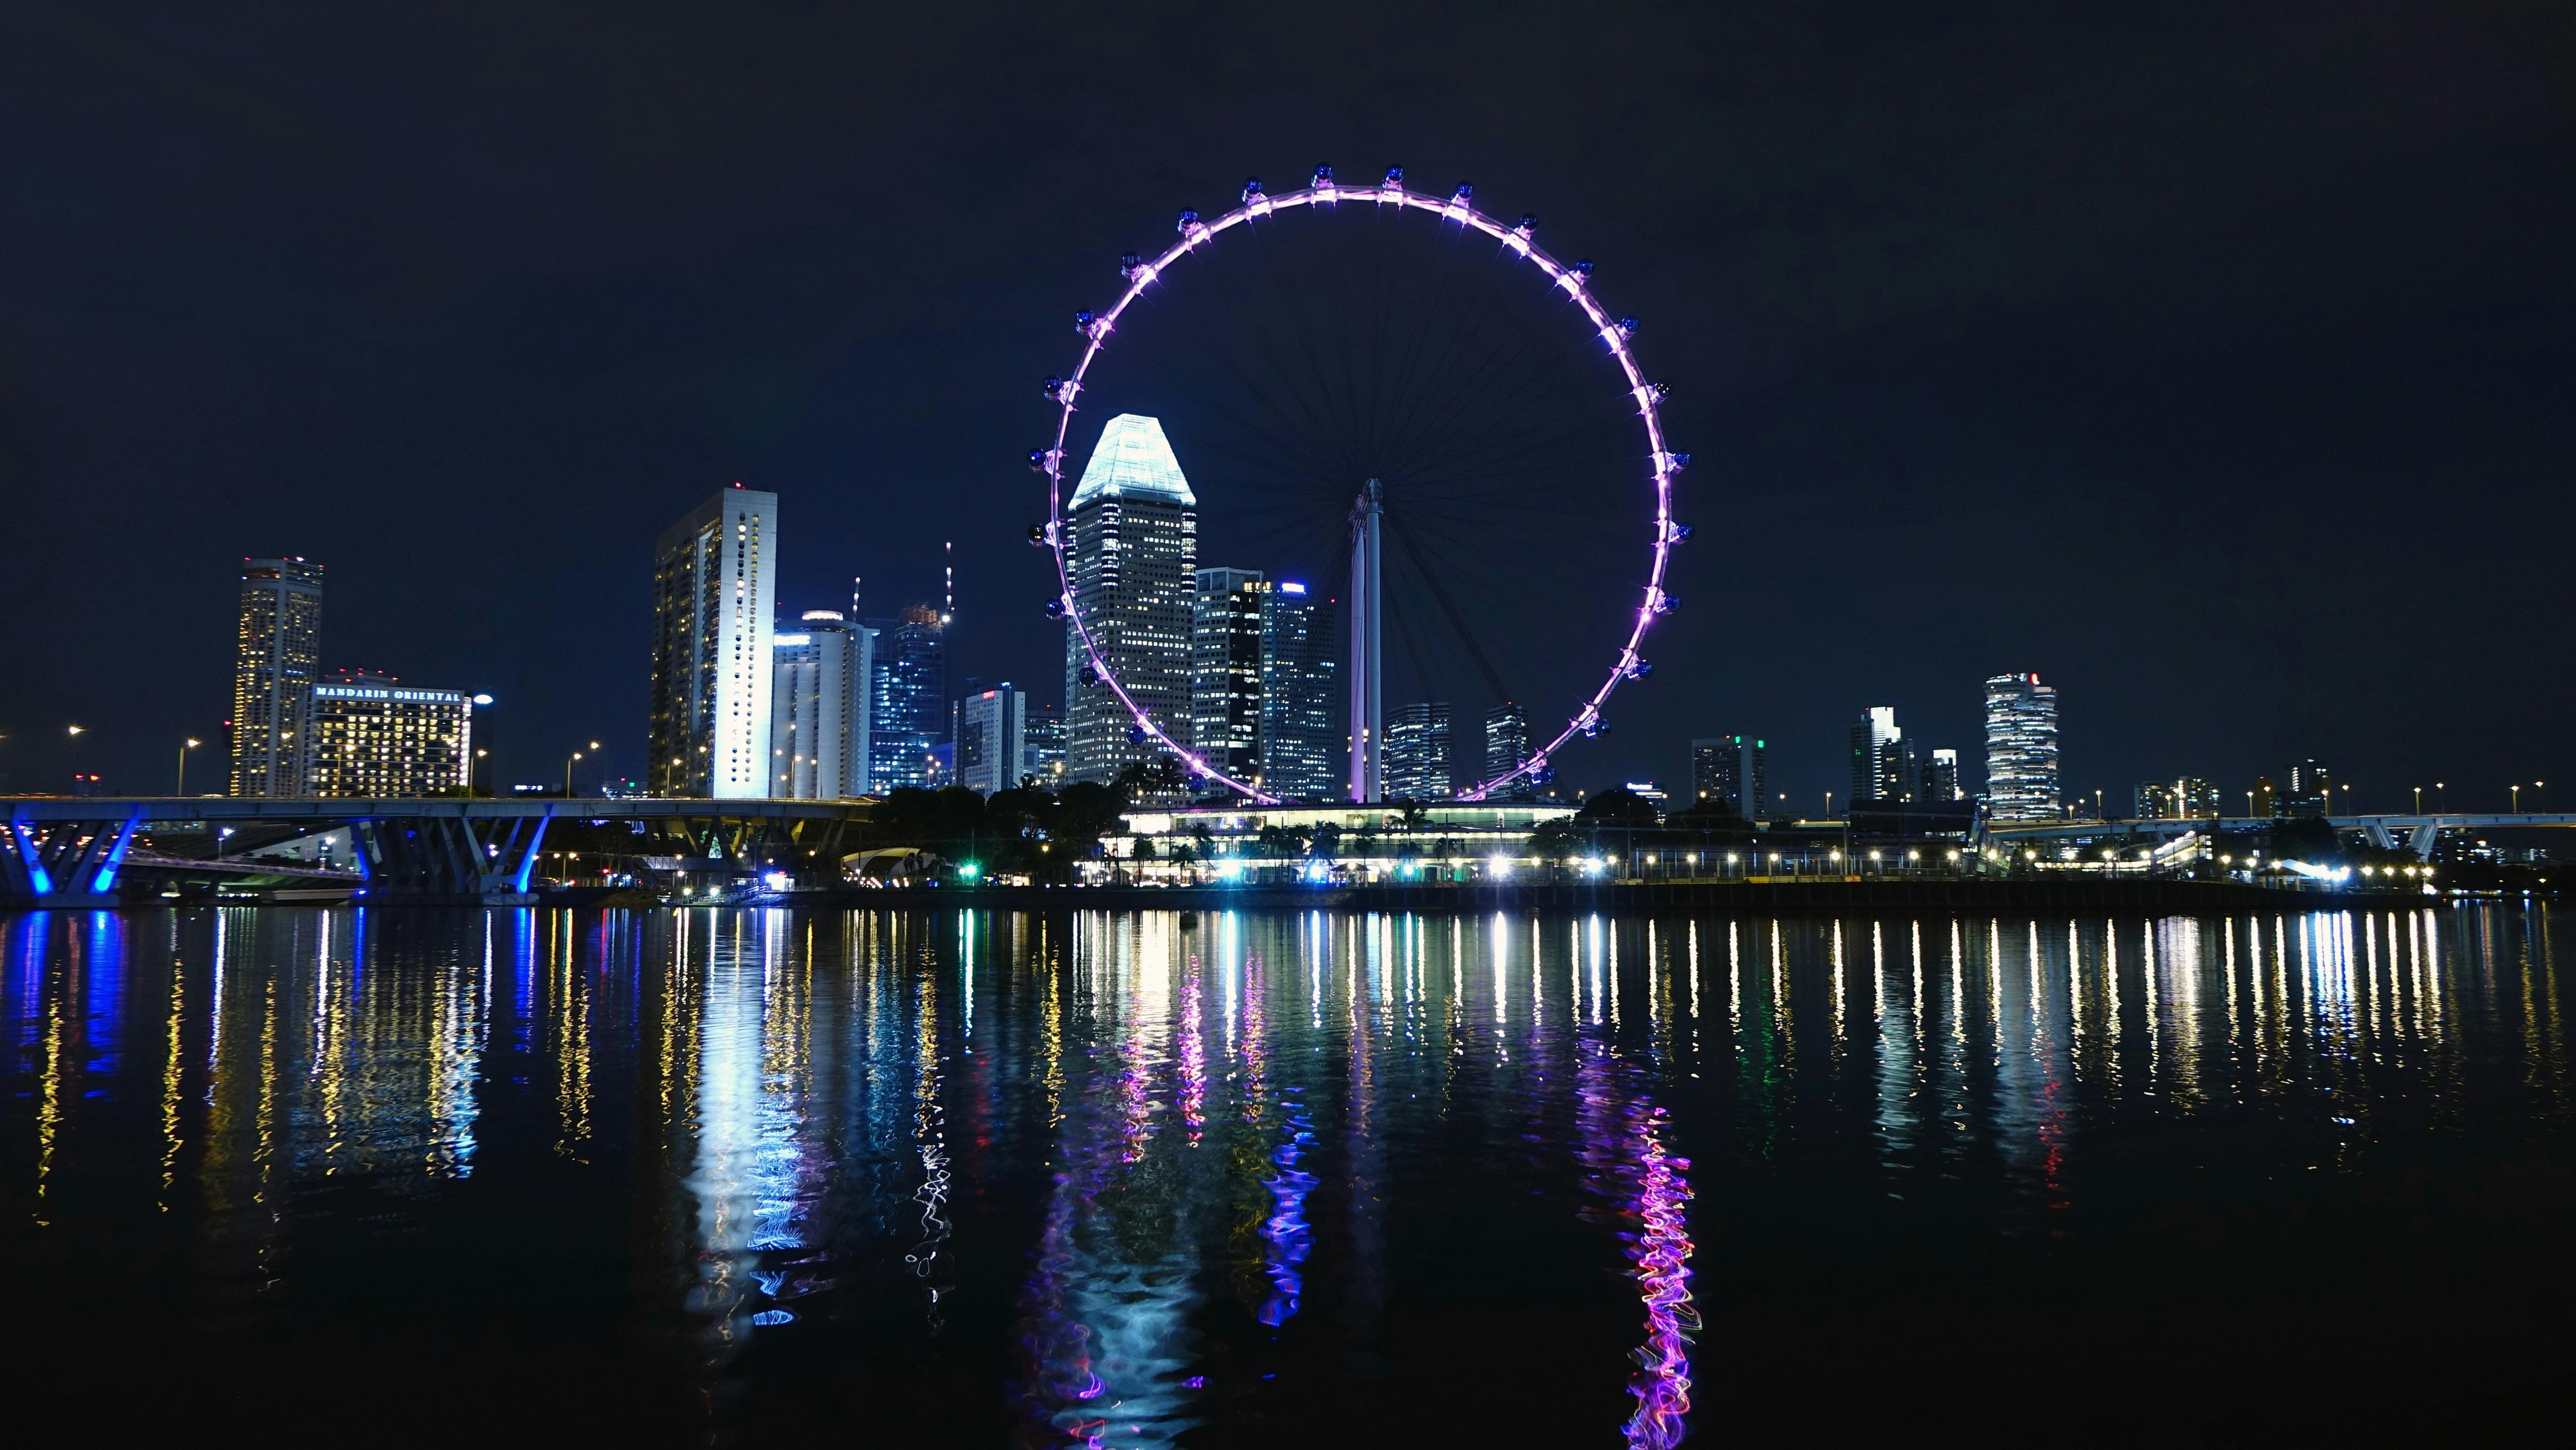 Wallpaper Singapore city night skyscrapers buildings promenade lights  3840x2160 UHD 4K Picture Image